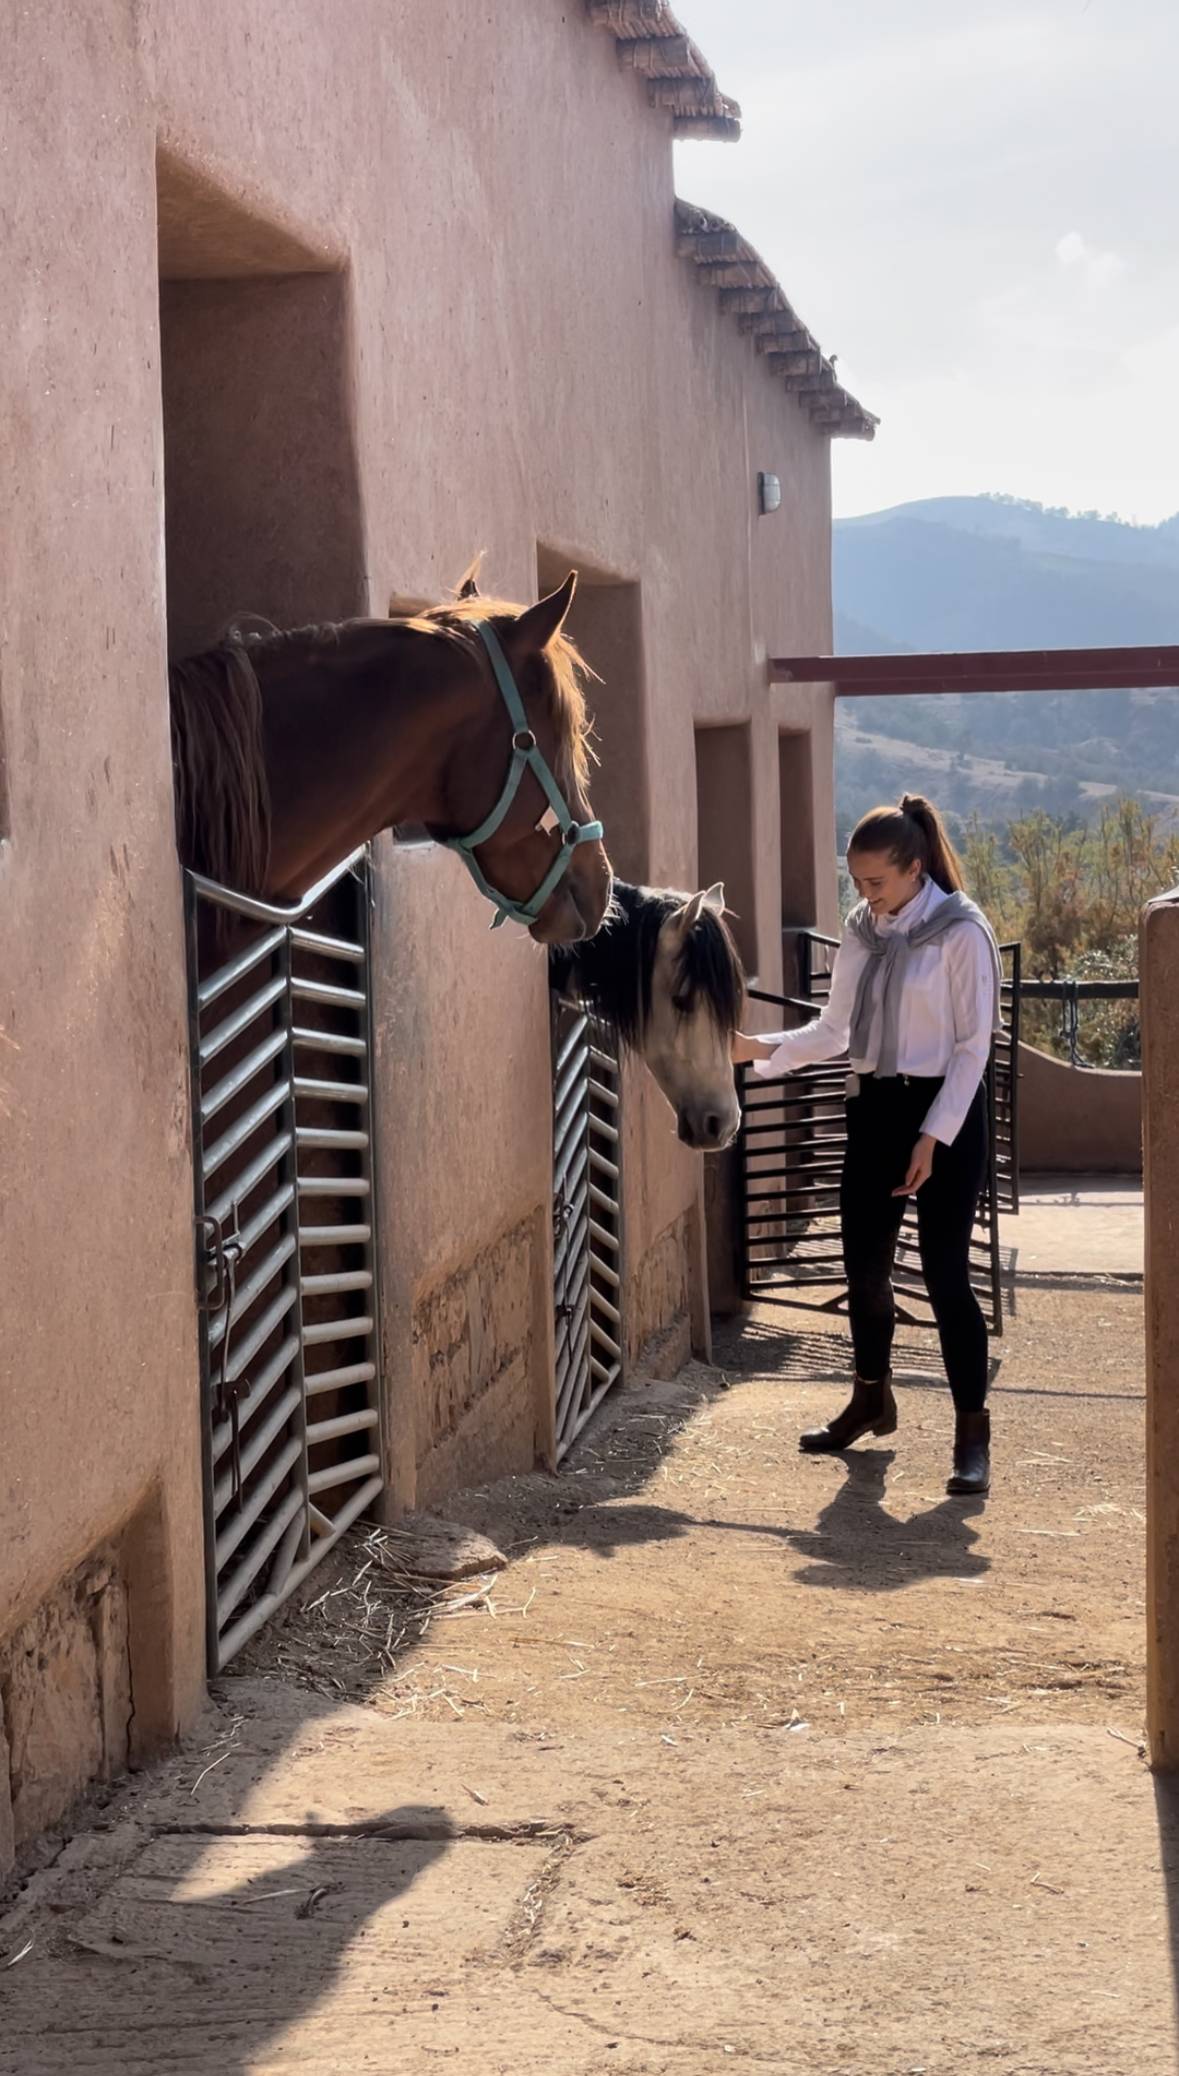 Horse Riding Trip to Morocco